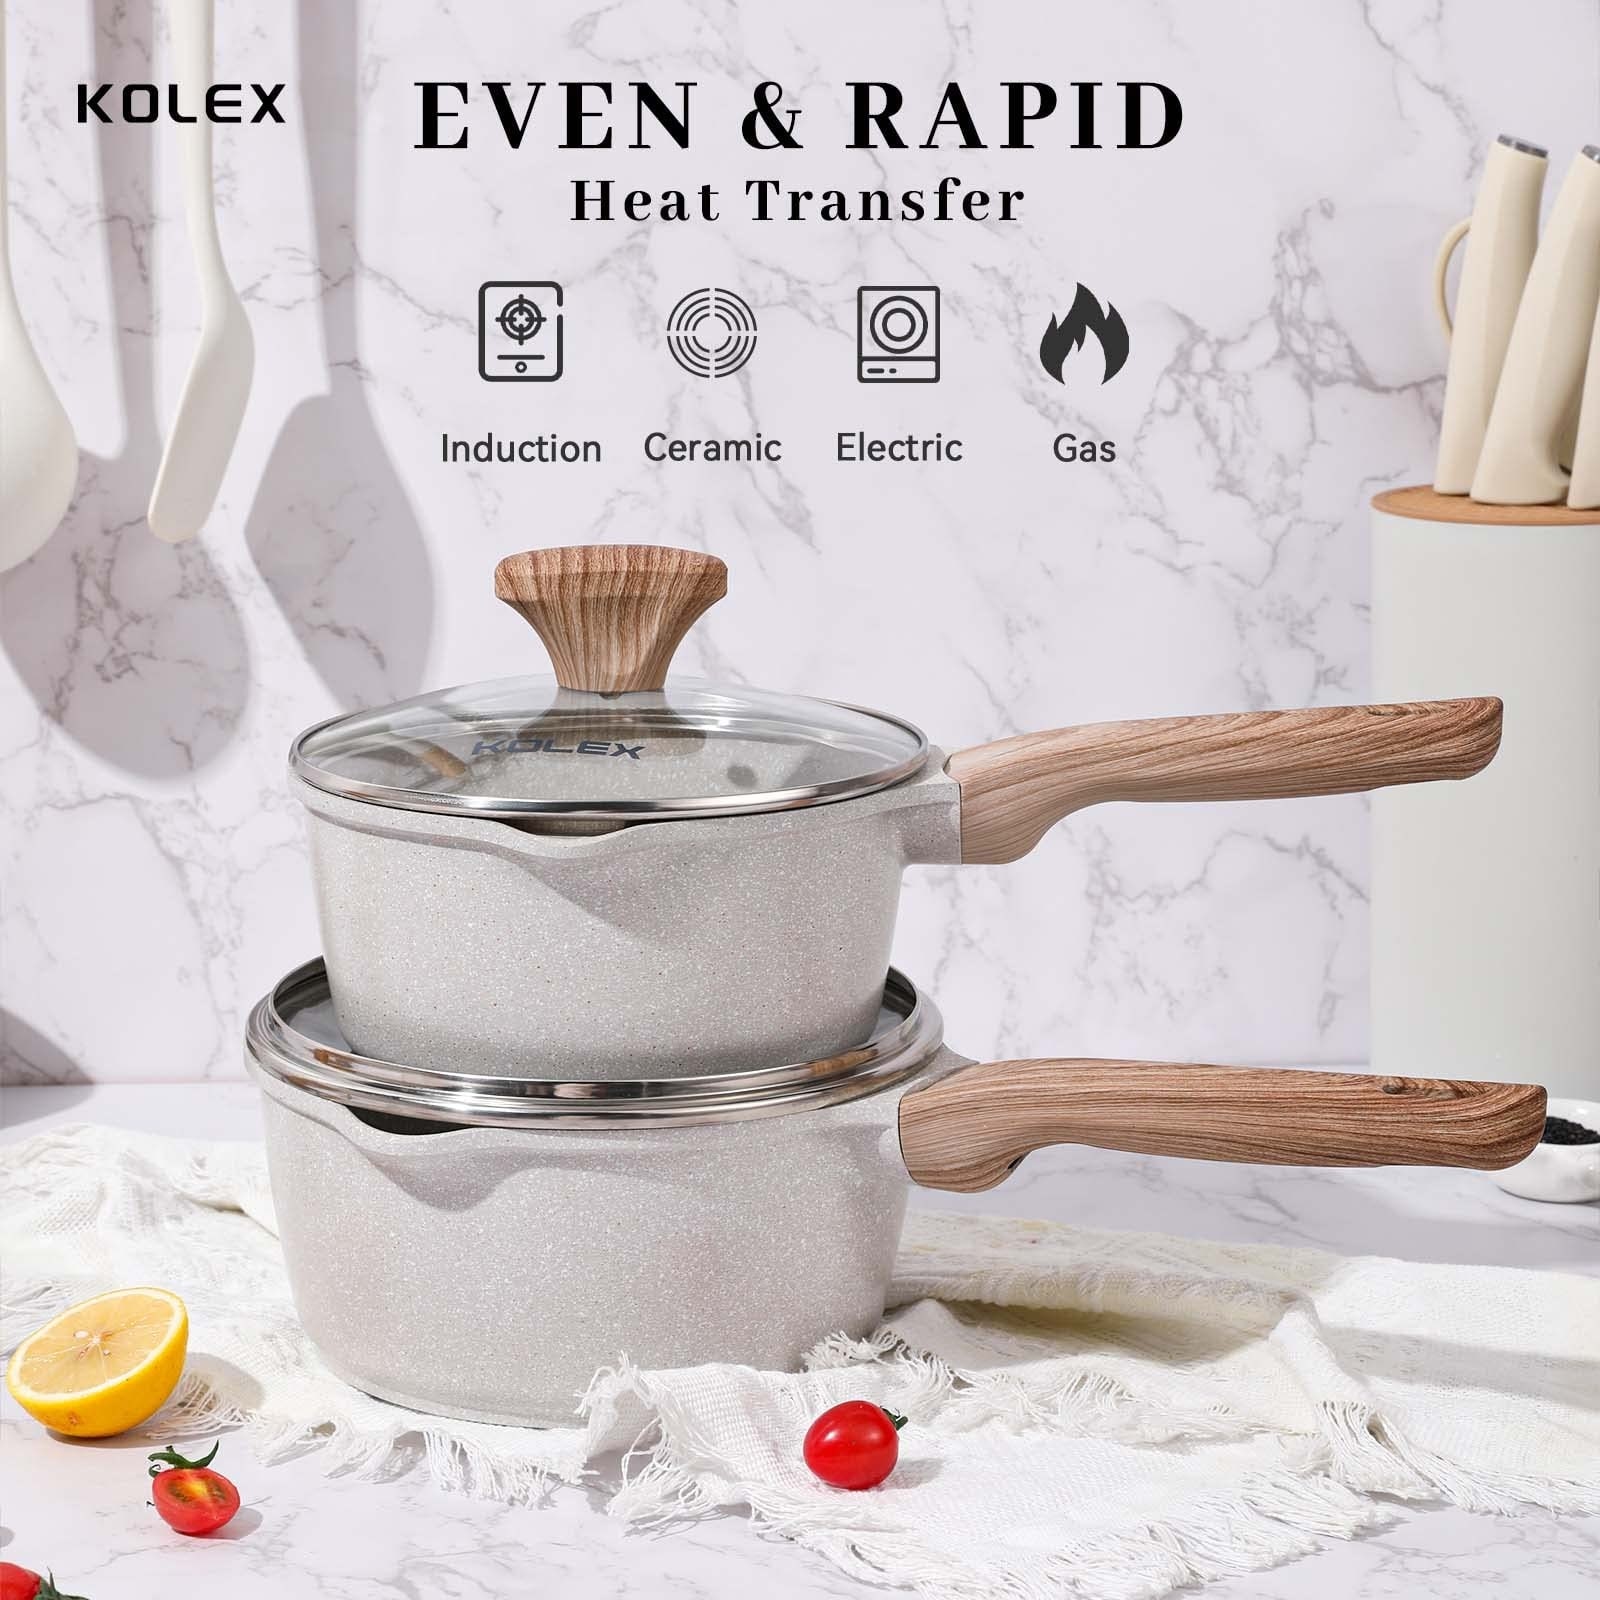 Kitchen Cookware Sets Nonstick, 12 Piece Pots and Pans Set Granite Cooking  Set - Bed Bath & Beyond - 39451345